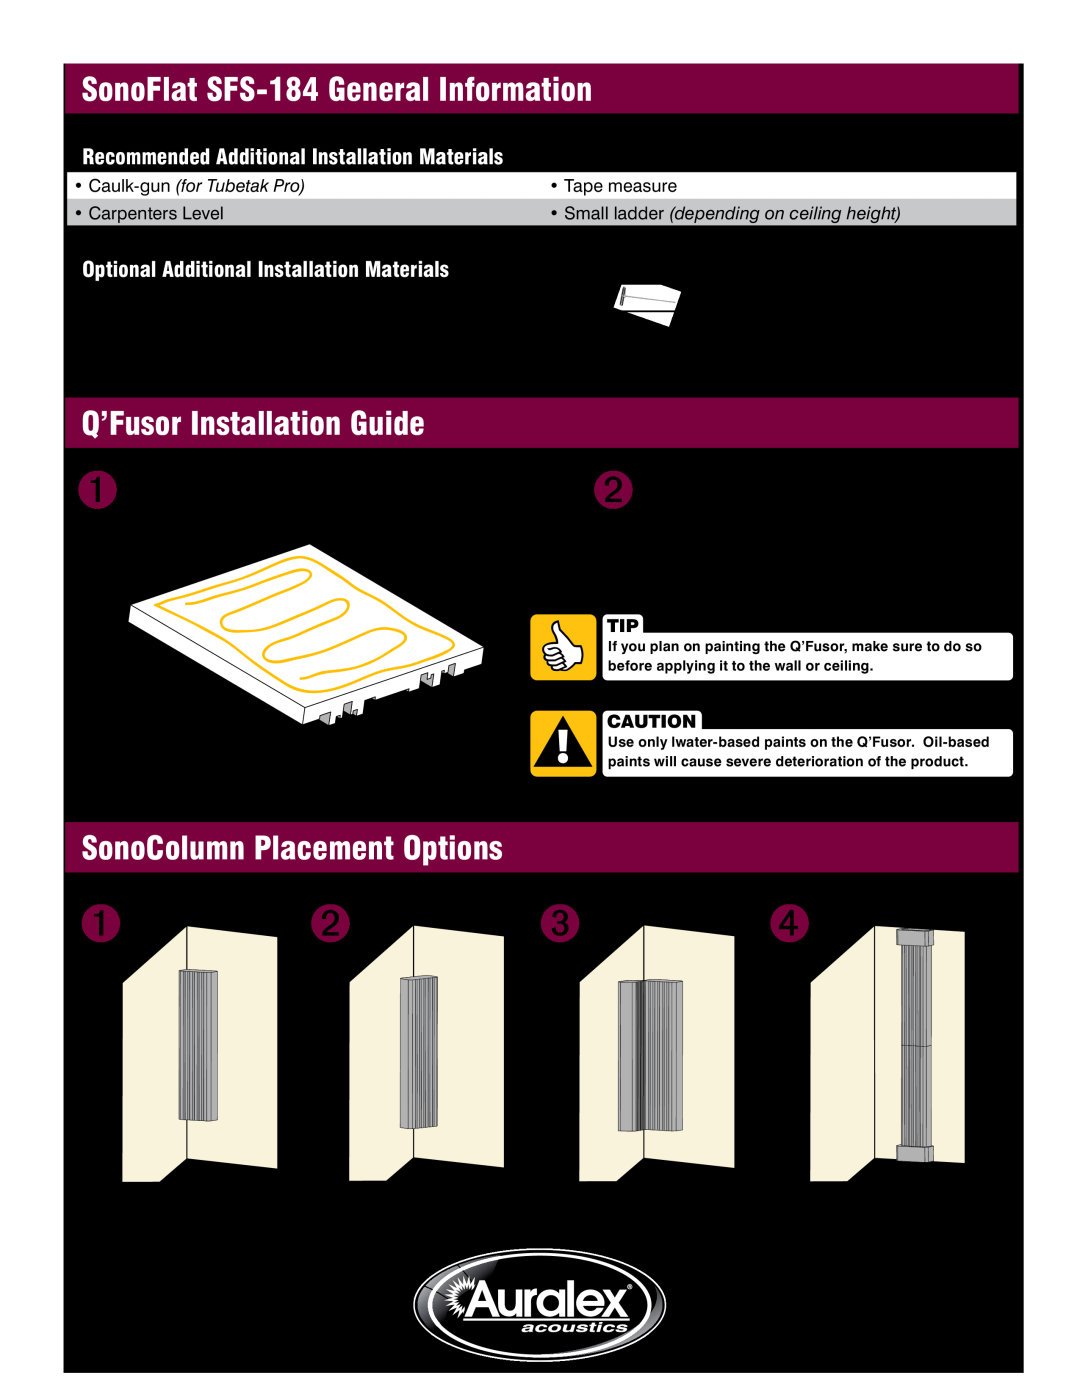 Auralex Acoustics manual SonoFlat SFS-184General Information, Q’Fusor Installation Guide, SonoColumn Placement Options 